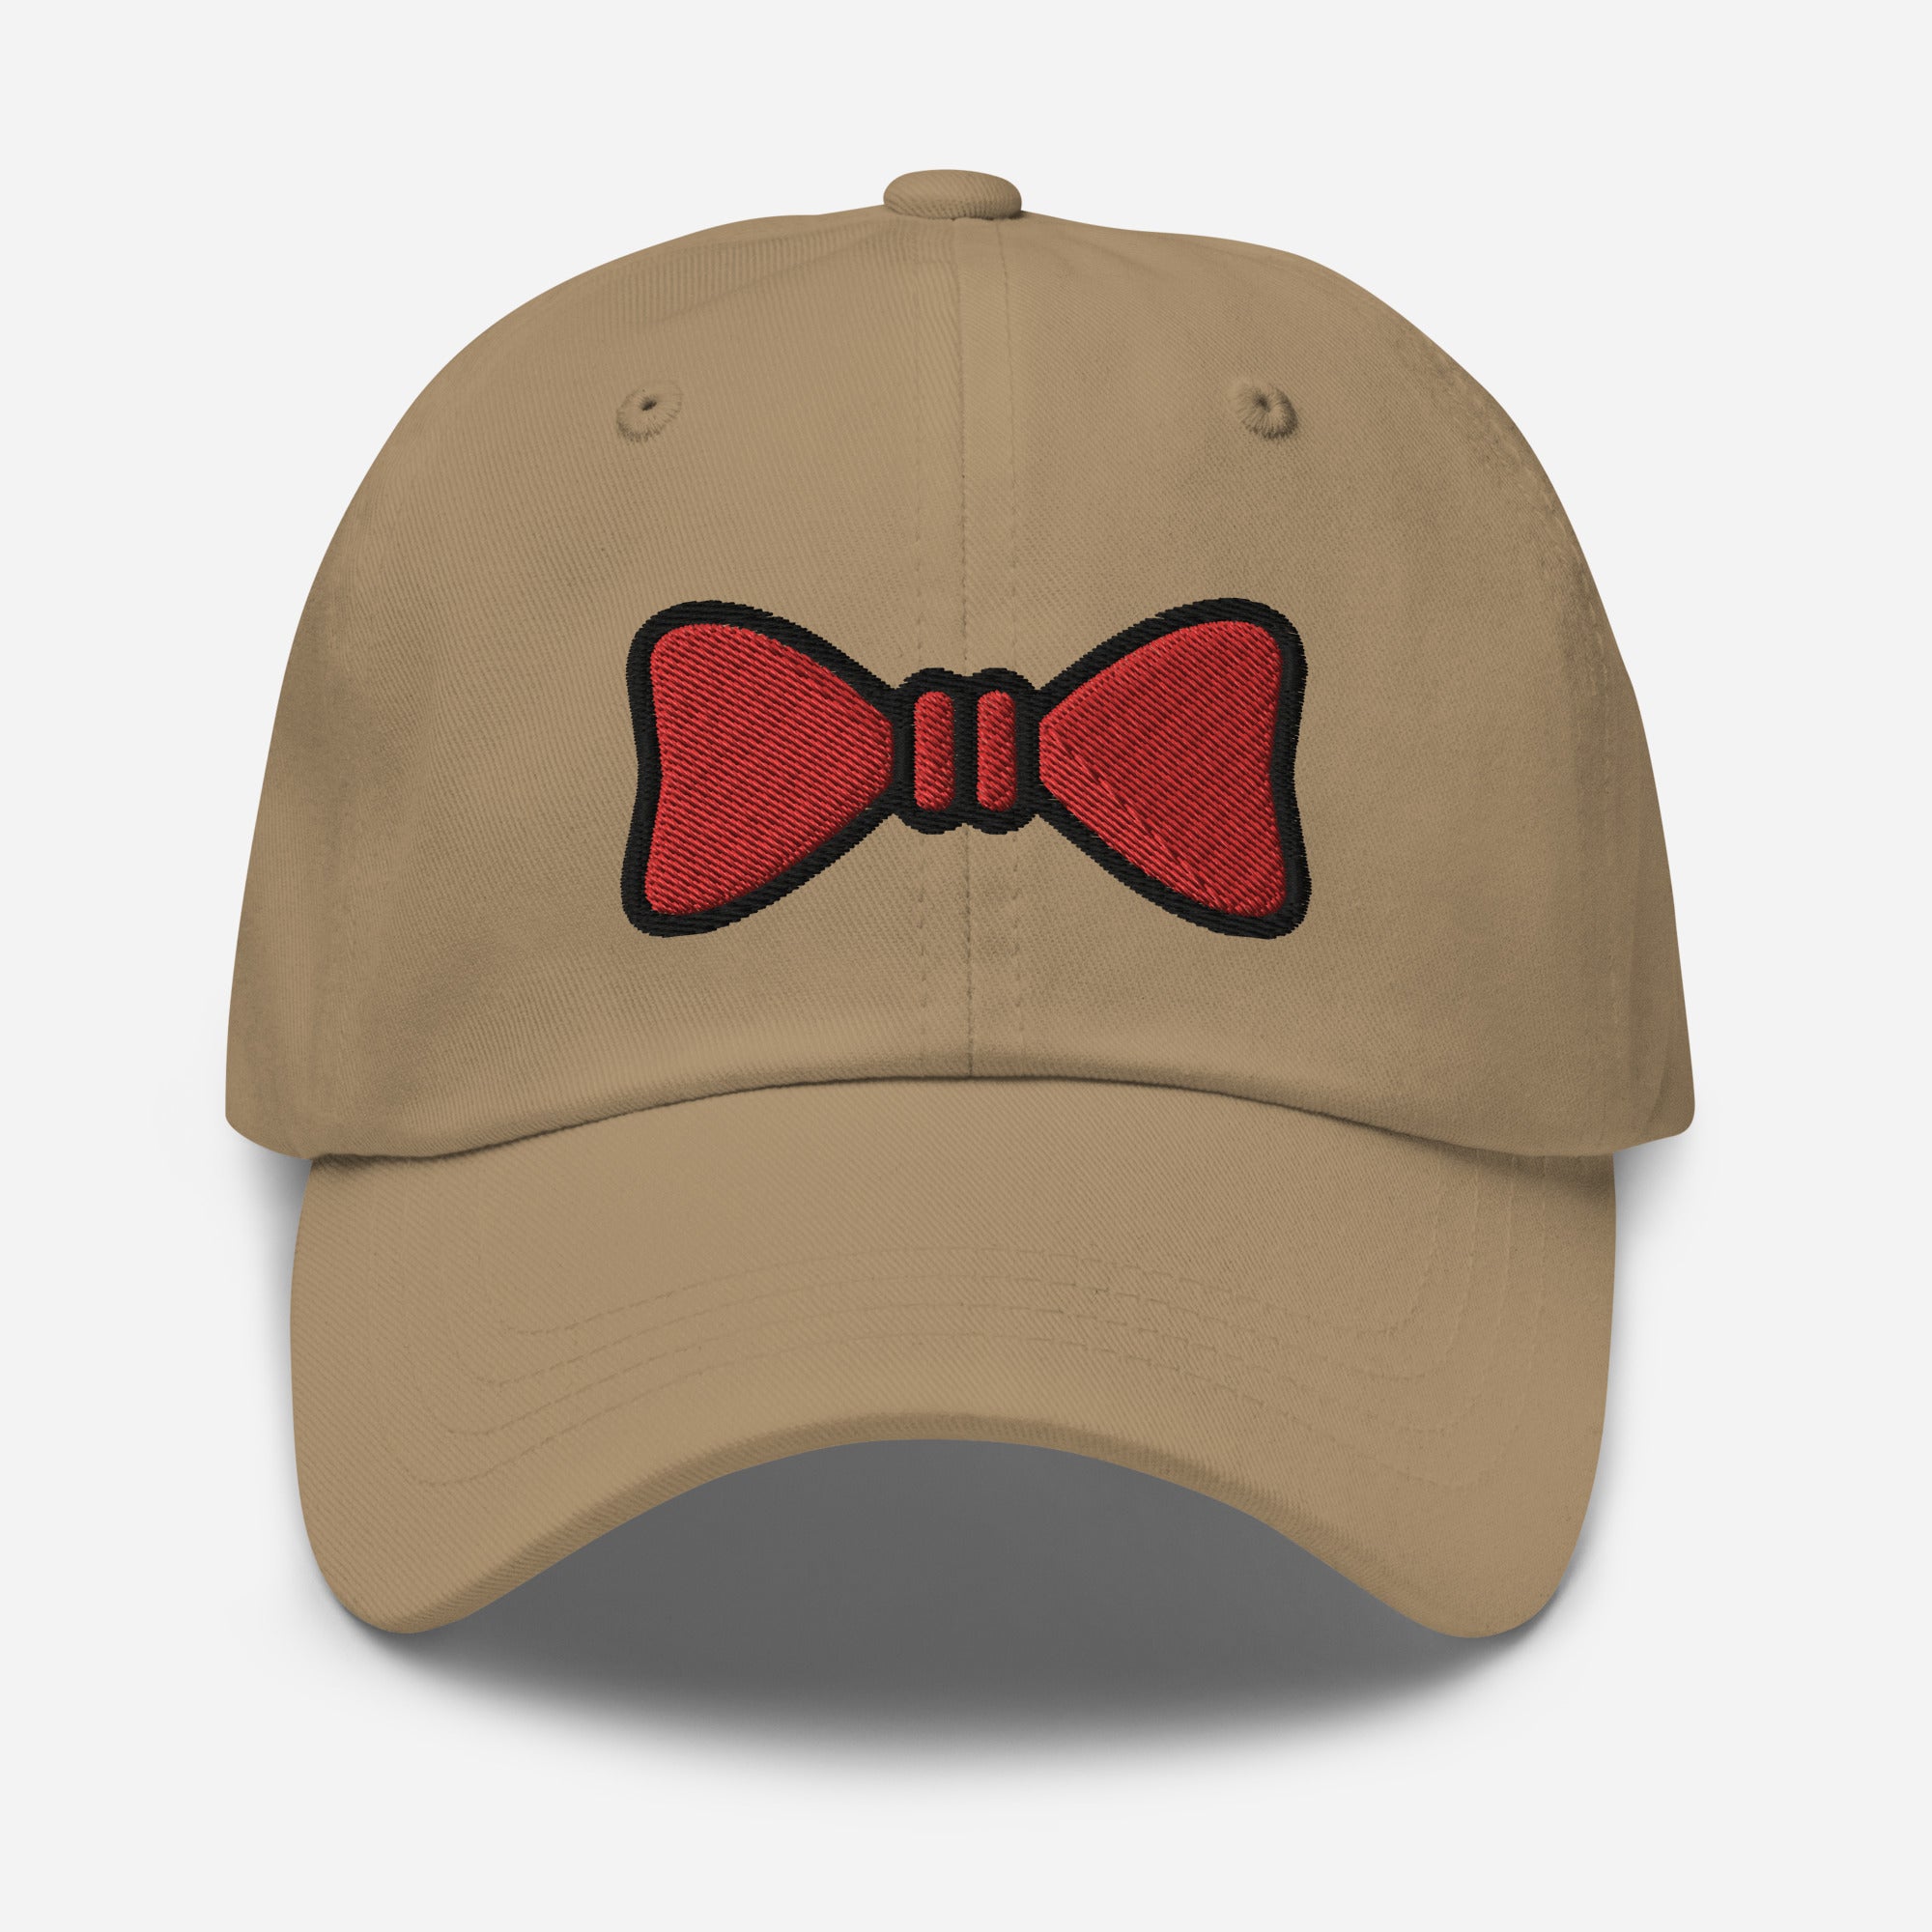 Bow Tie Dad Hat, Embroidered Christmas Unisex Hat, Handmade Dad Cap, Xmas Festive Adjustable Baseball Gift Cap